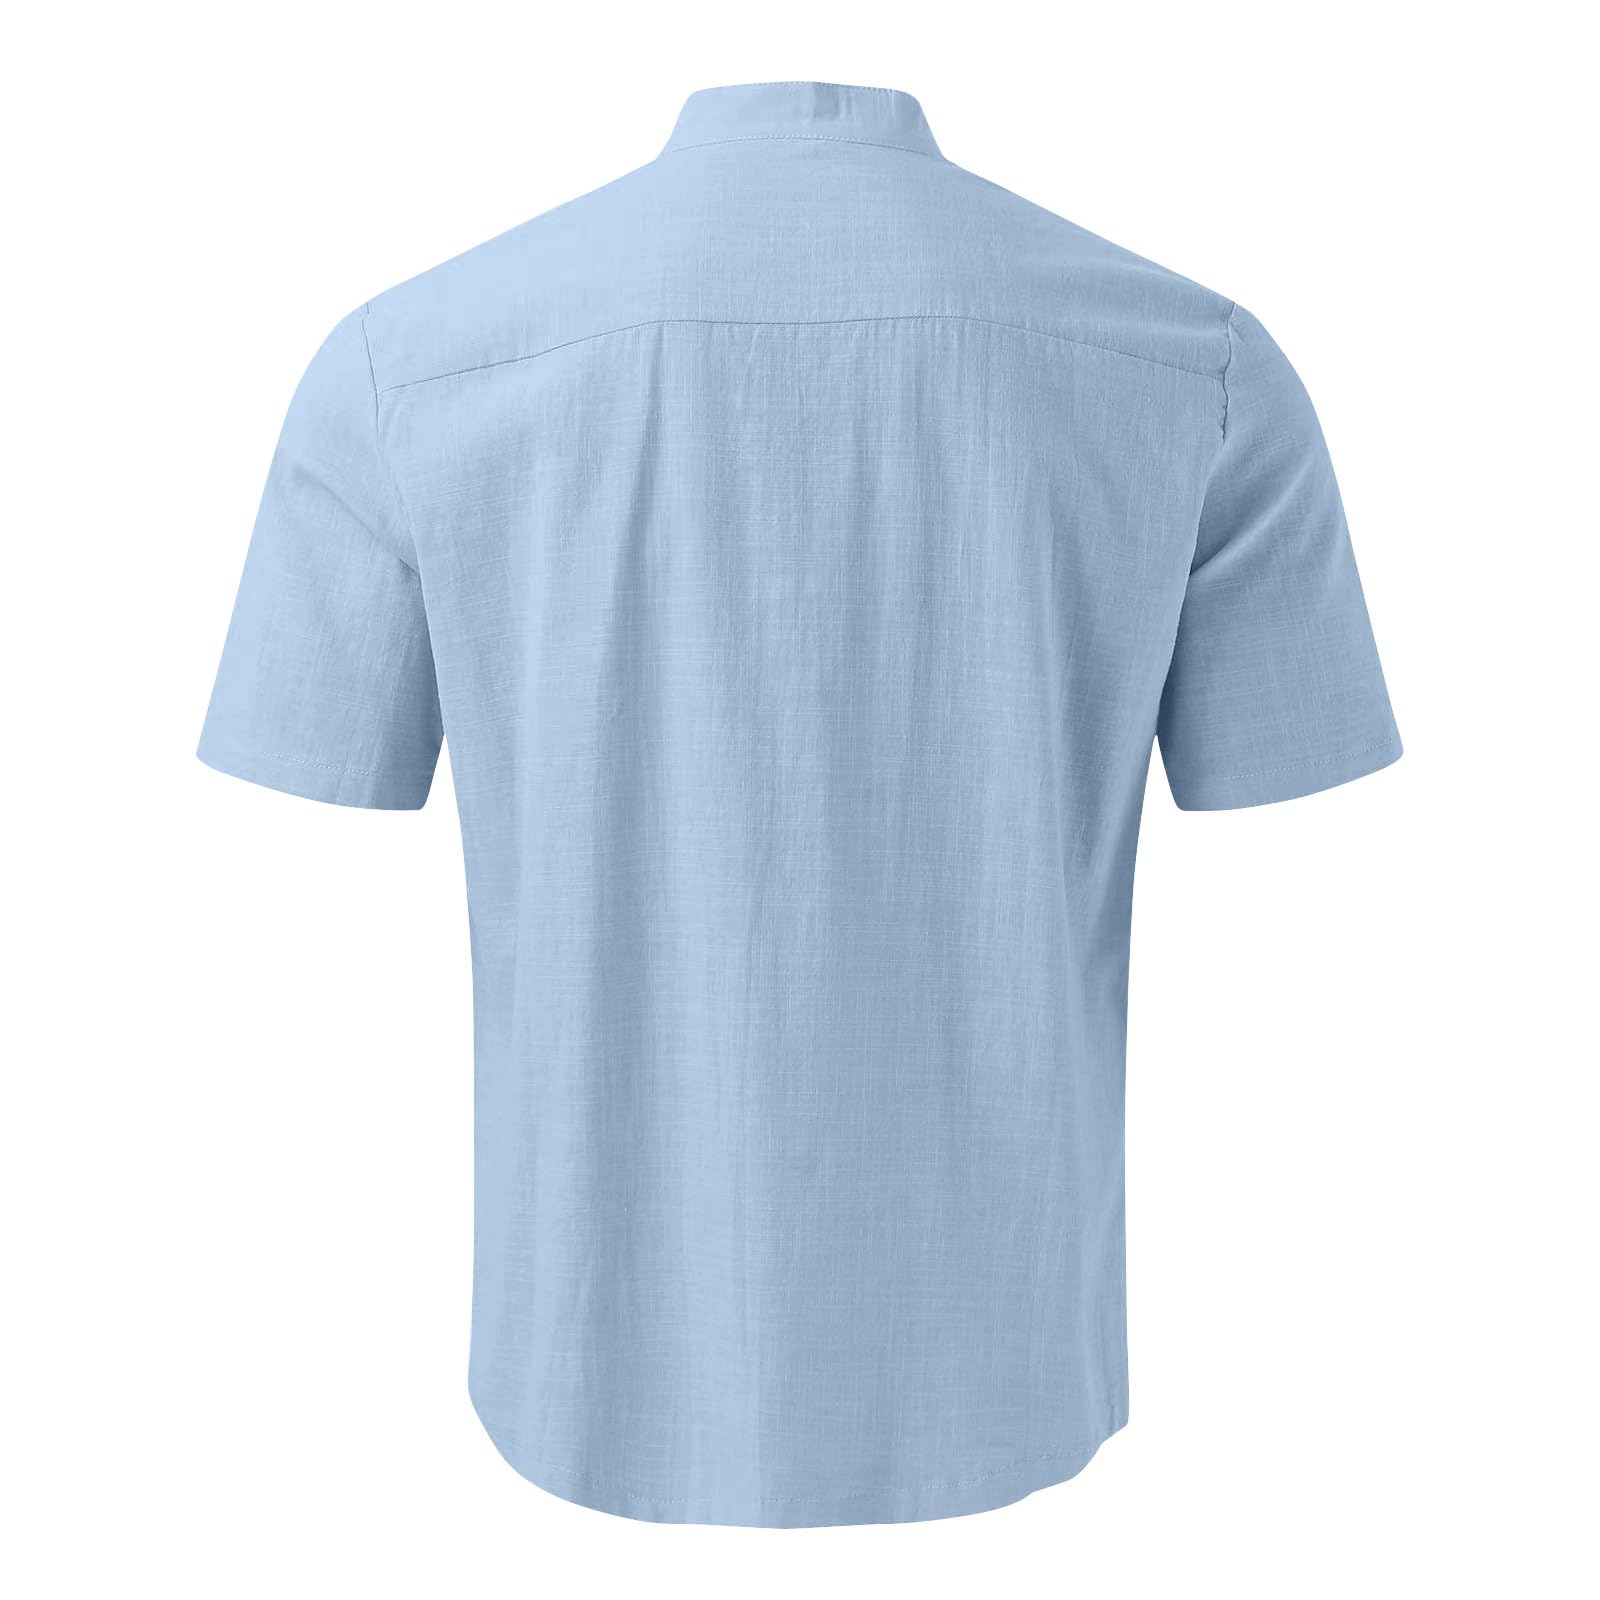 Buy Kvsozwuty Linen Shirts for Men Short Sleeve Linen Beach Shirts Button  Down Summer Casual Shirts Loose Fit Work Dress Shirts